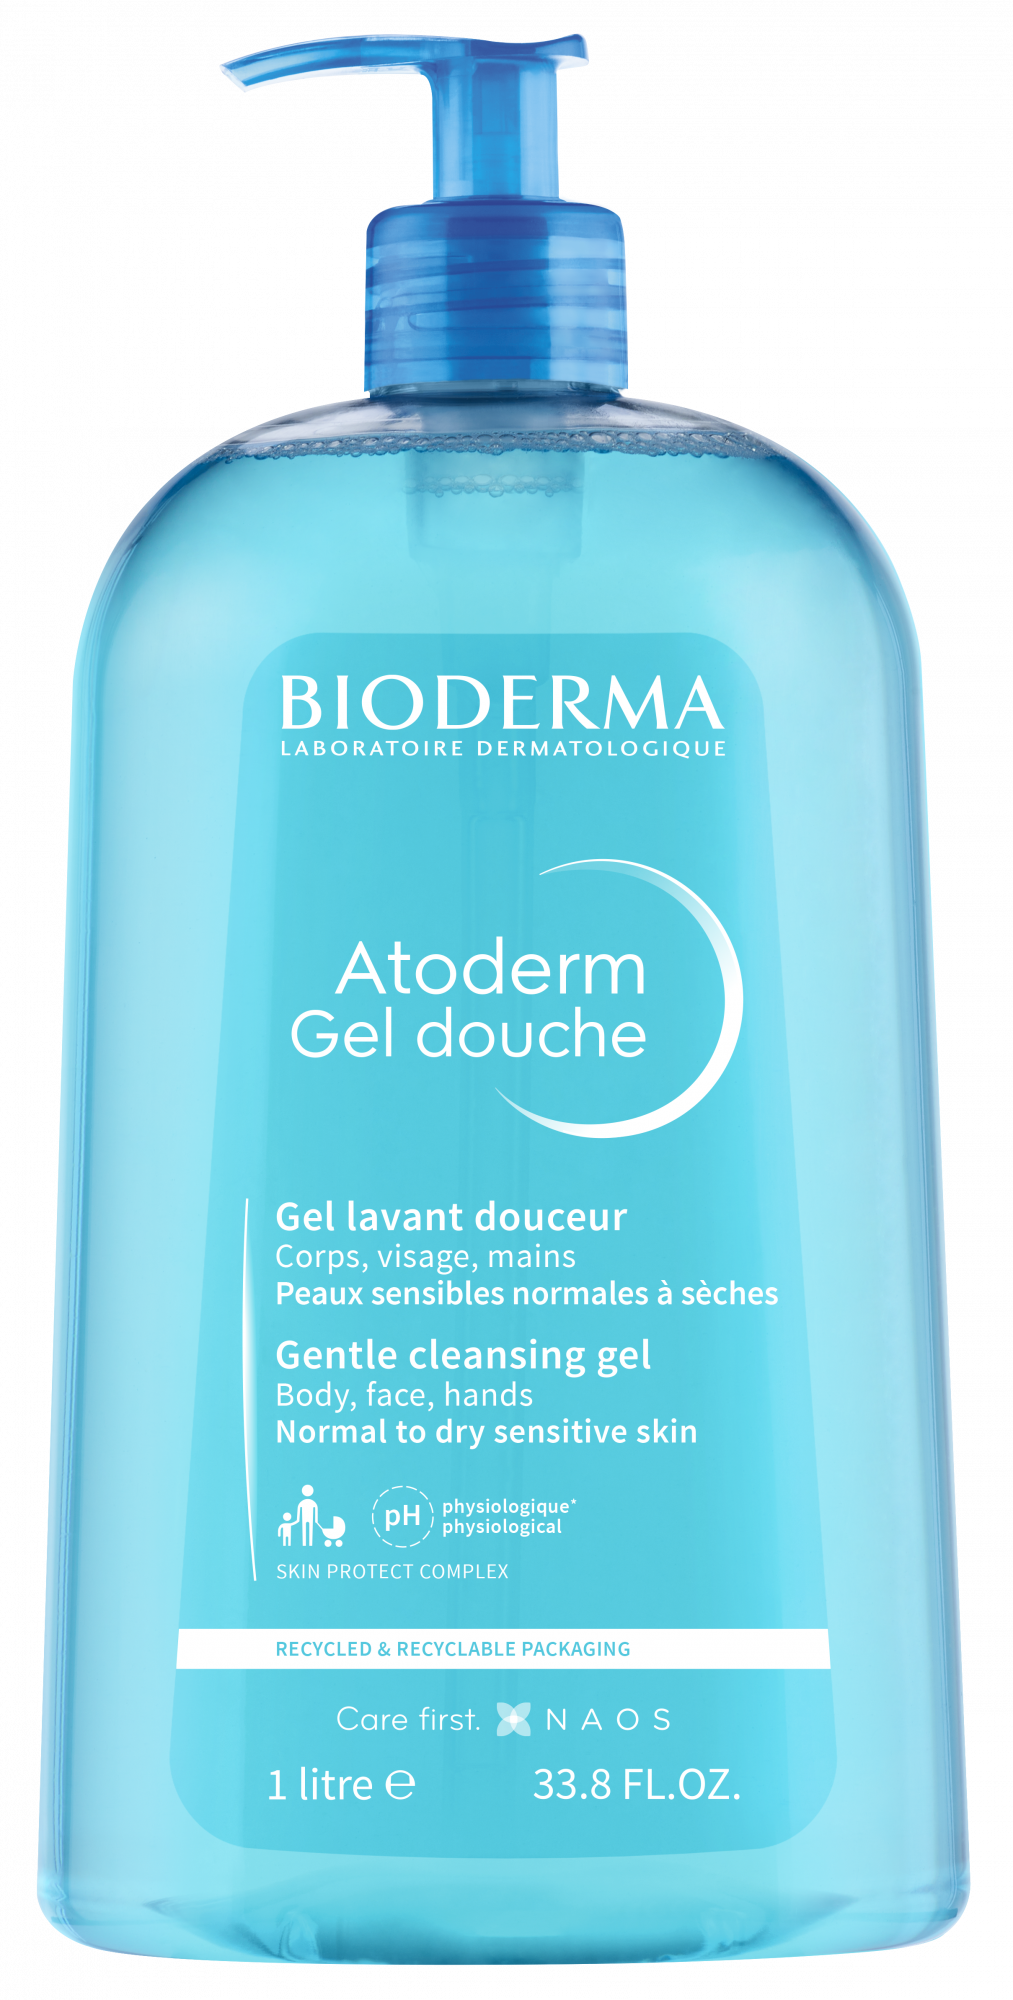 Body wash for sensitive skin | Atoderm Gel Douche